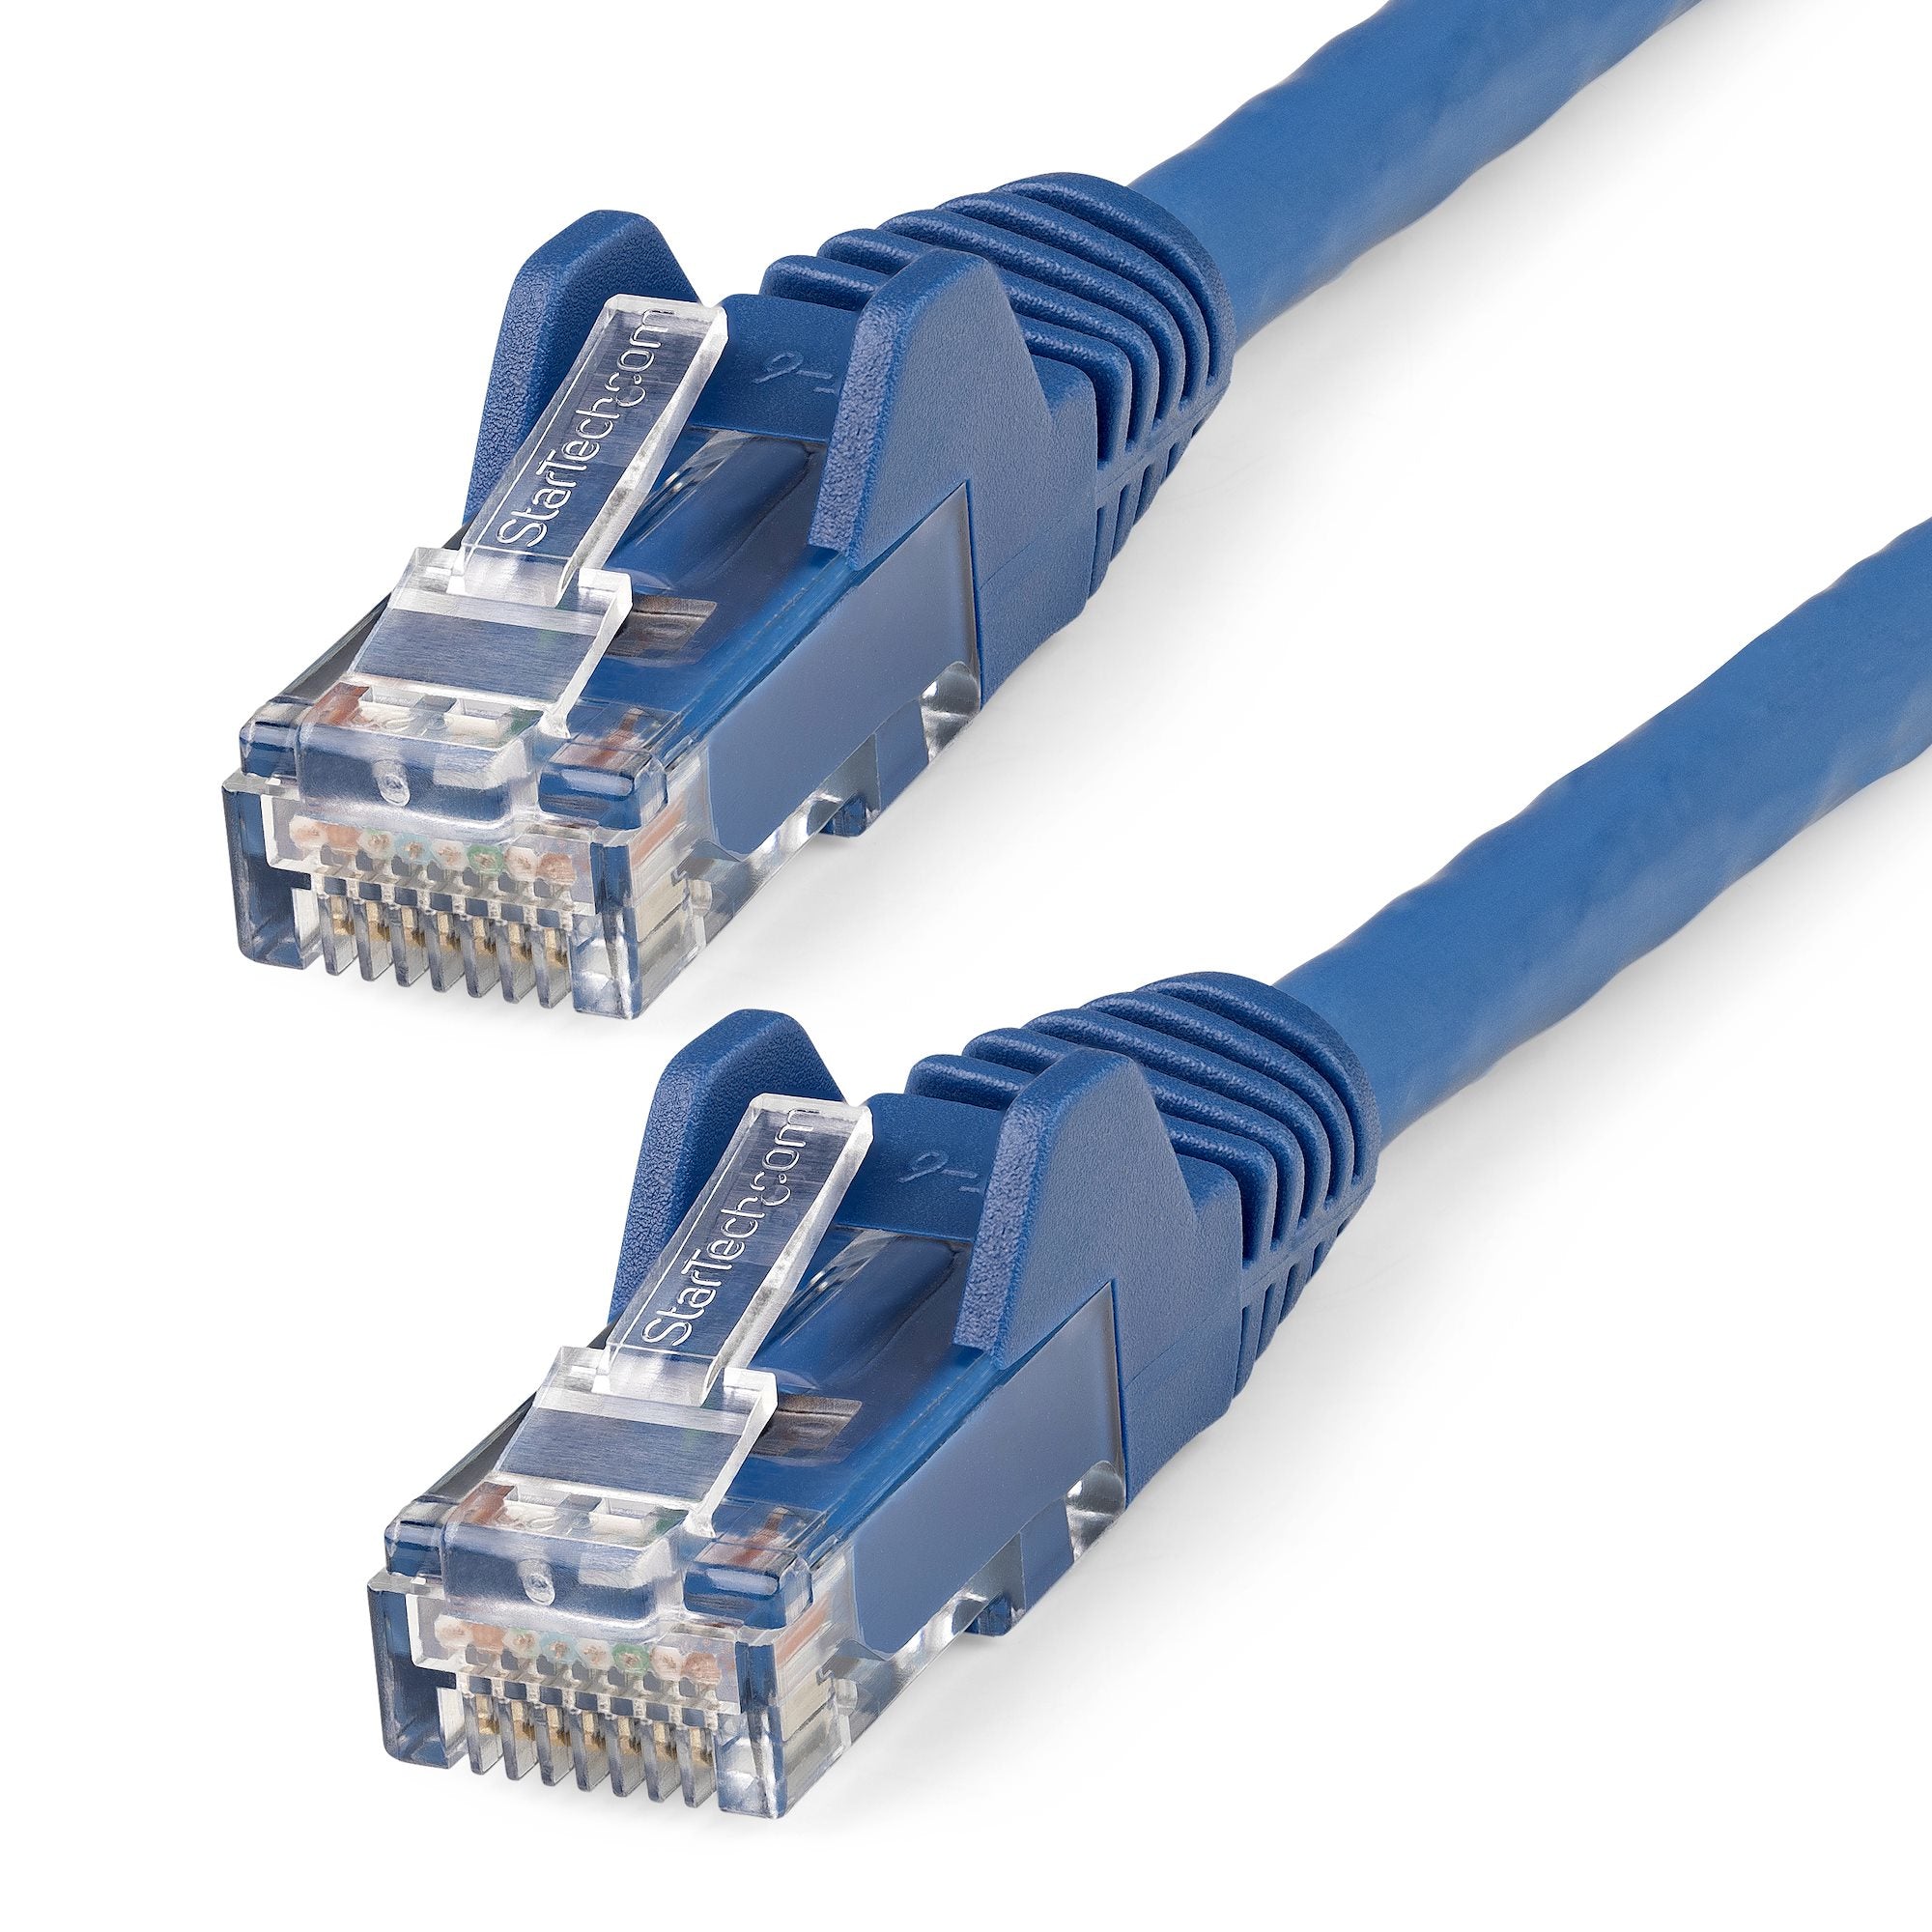 StarTech.com 5m CAT6 Ethernet Cable - LSZH (Low Smoke Zero Halogen) - 10 Gigabit 650MHz 100W PoE RJ45 10GbE UTP Network Patch Cord Snagless with Strain Relief - Blue, CAT 6, ETL Verified, 24AWG